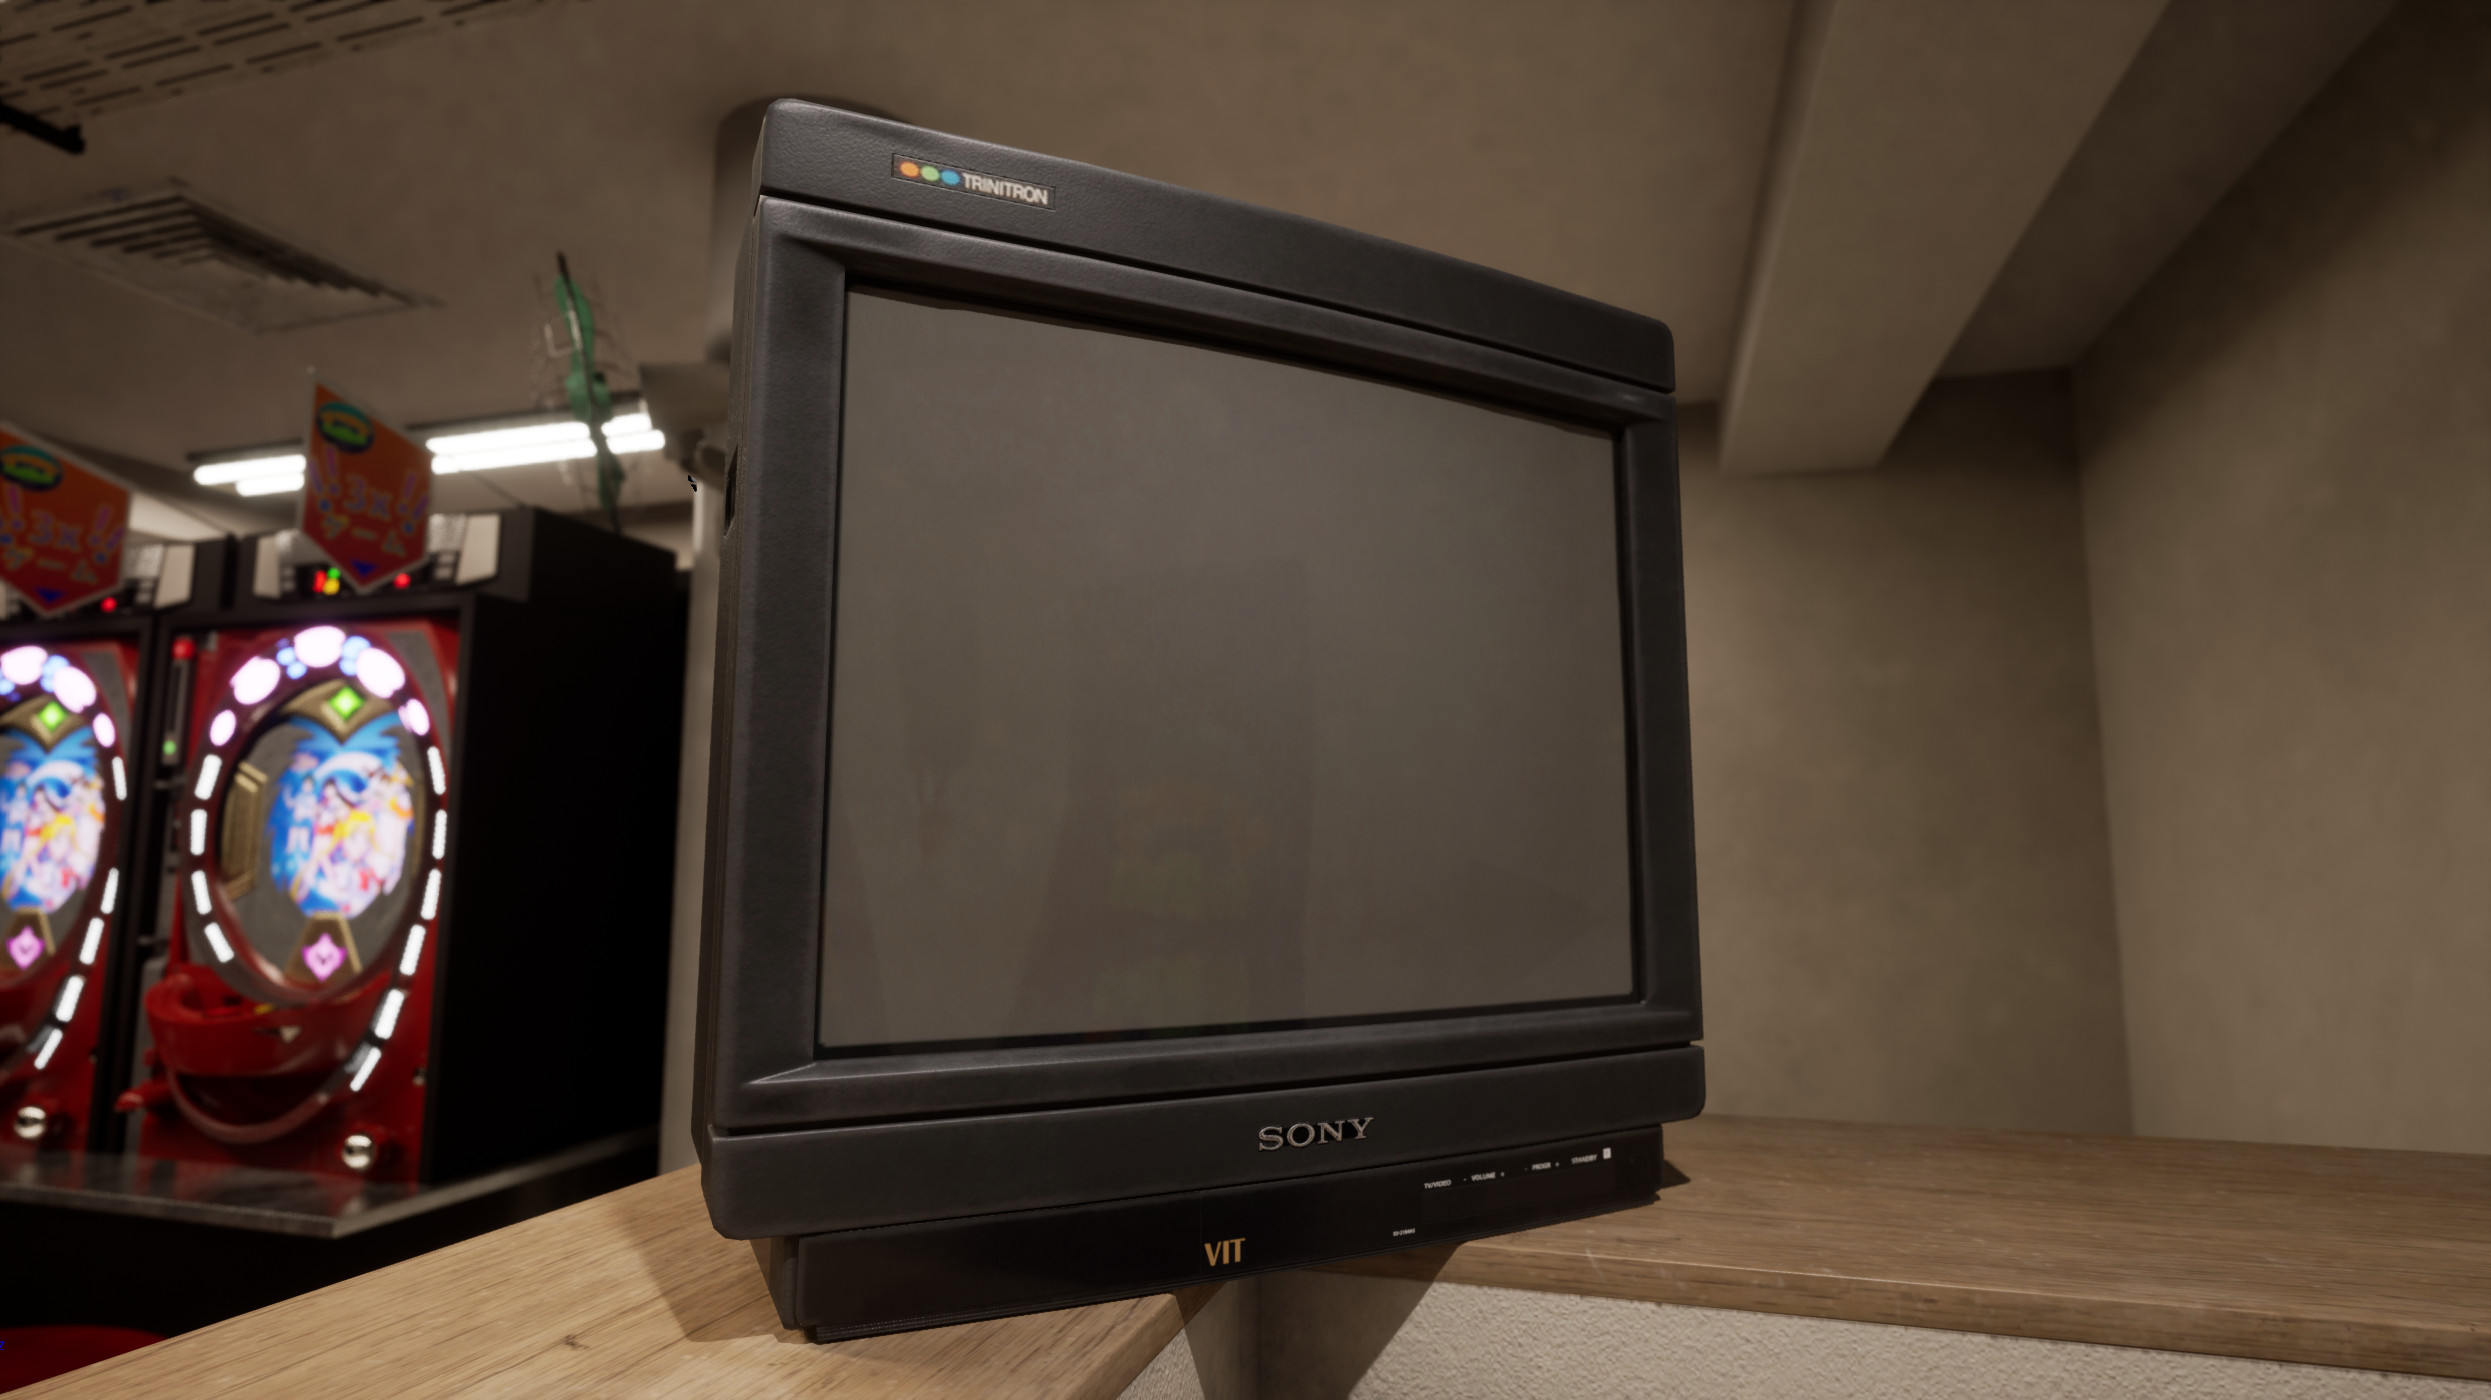 Television based on the Sony Trinitron